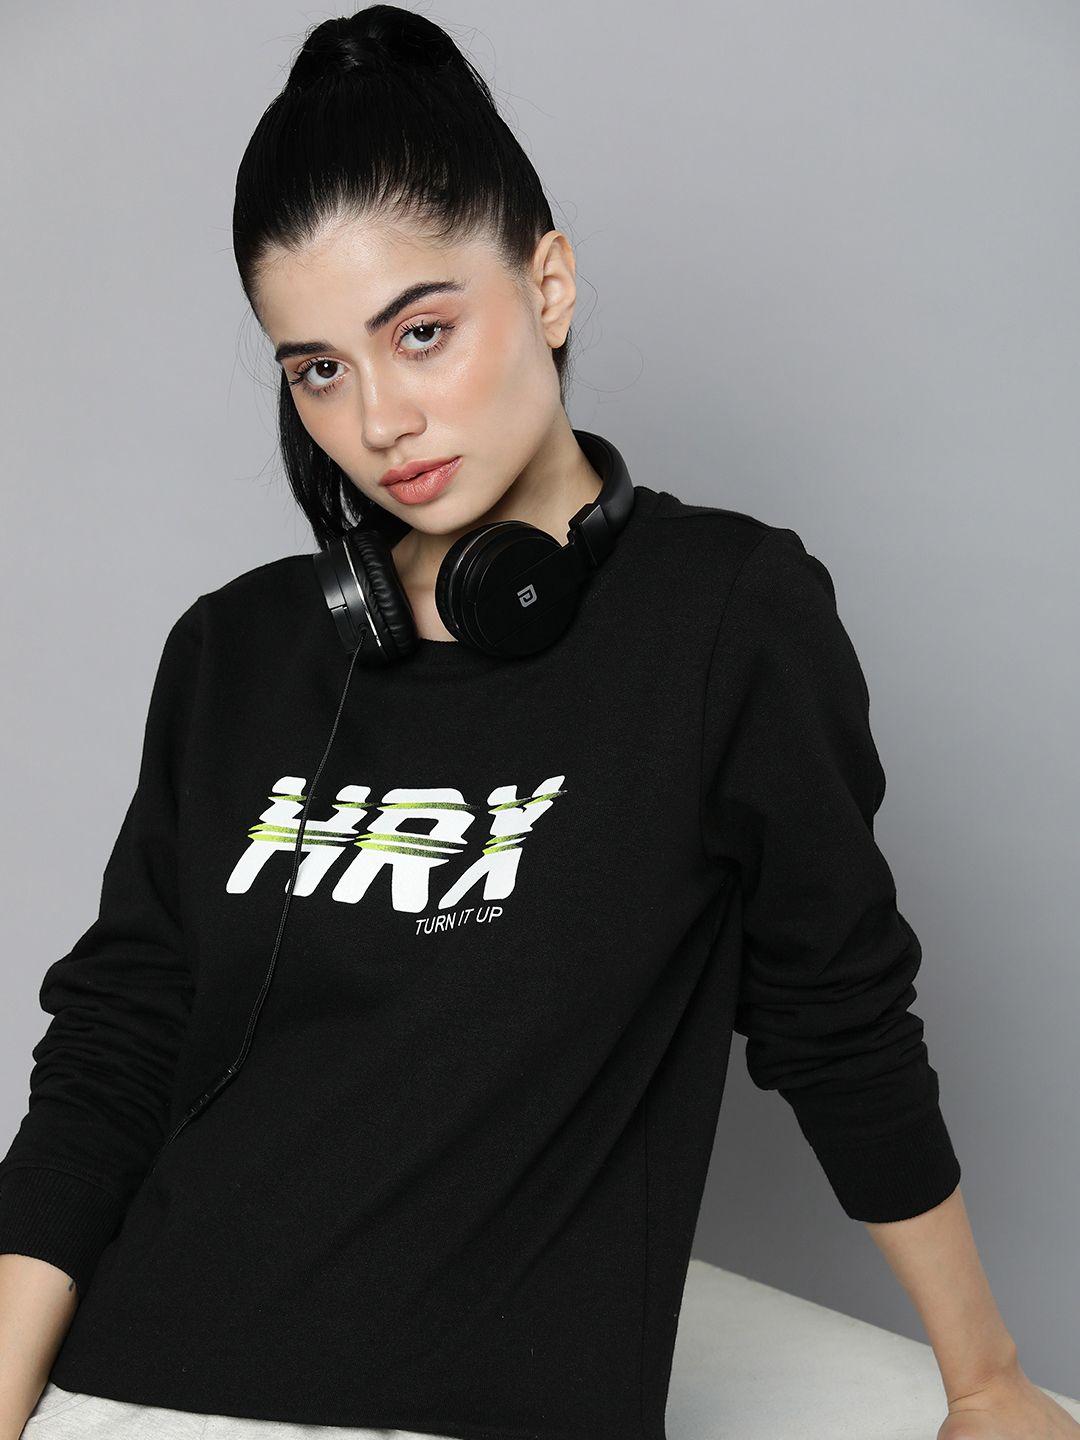 hrx by hrithik roshan women printed sweatshirt